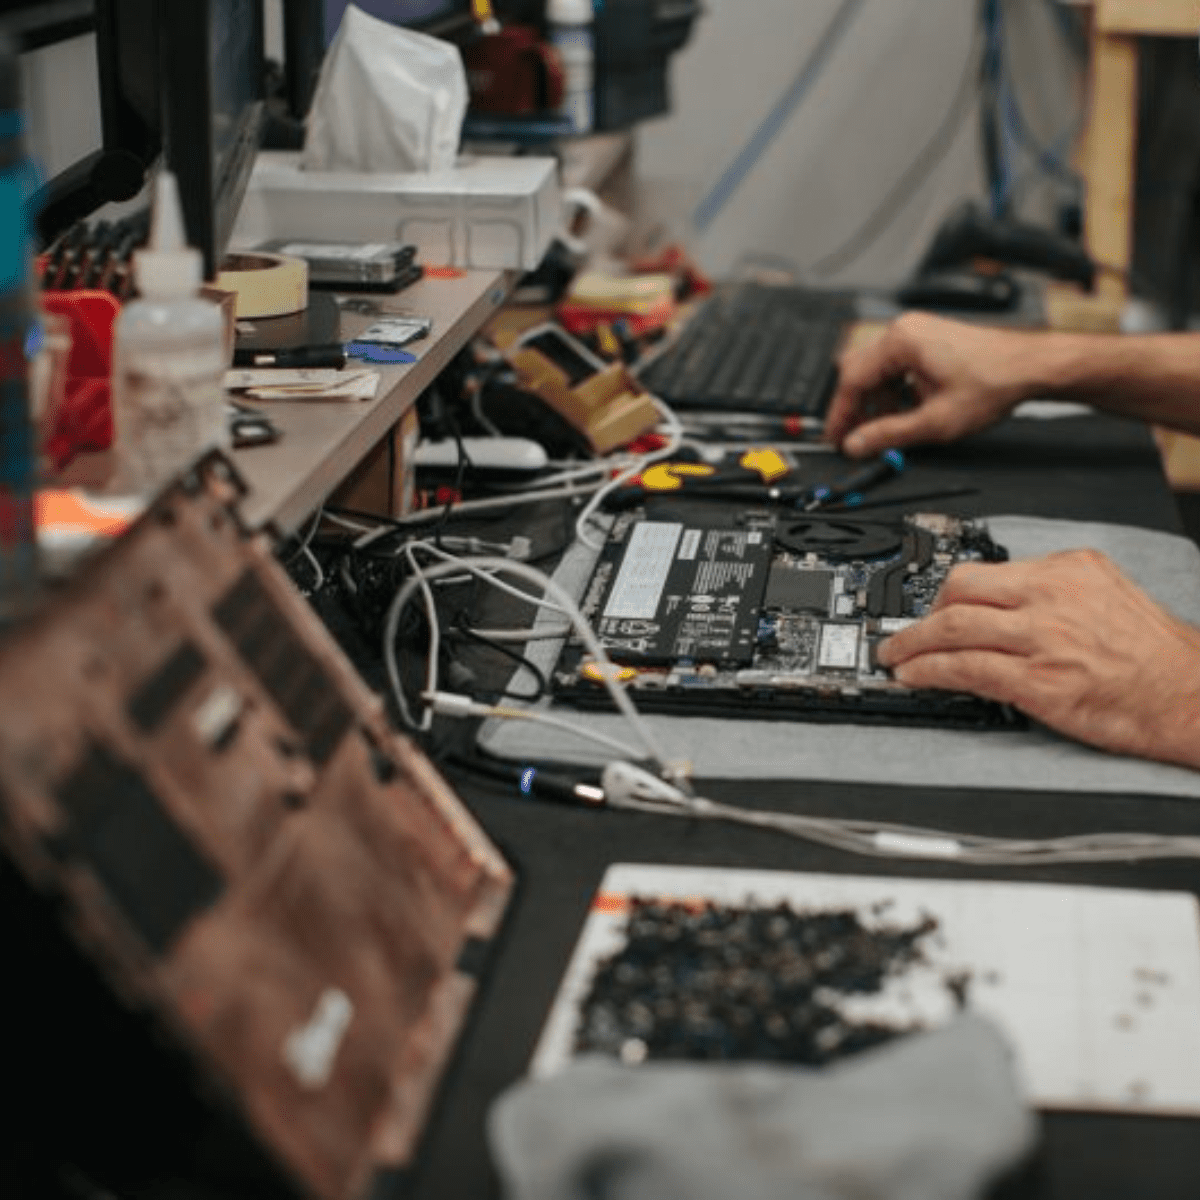 Hands repairing a laptop computer on a workbench